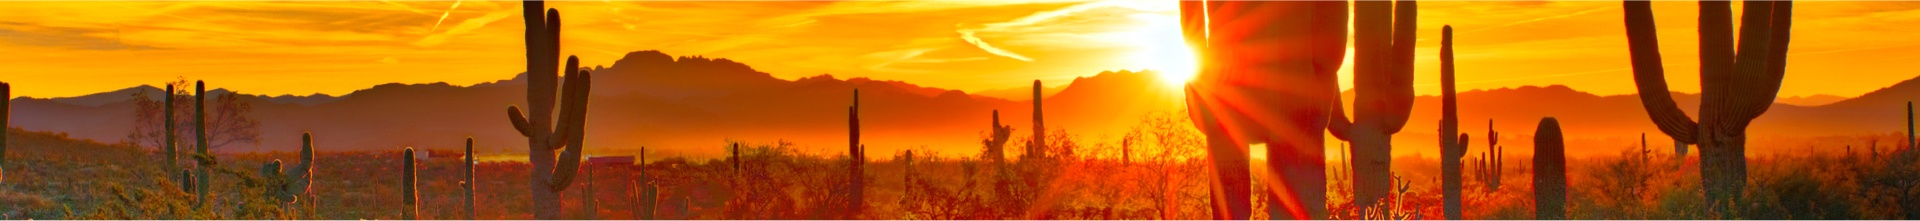 desert landscape with cacti